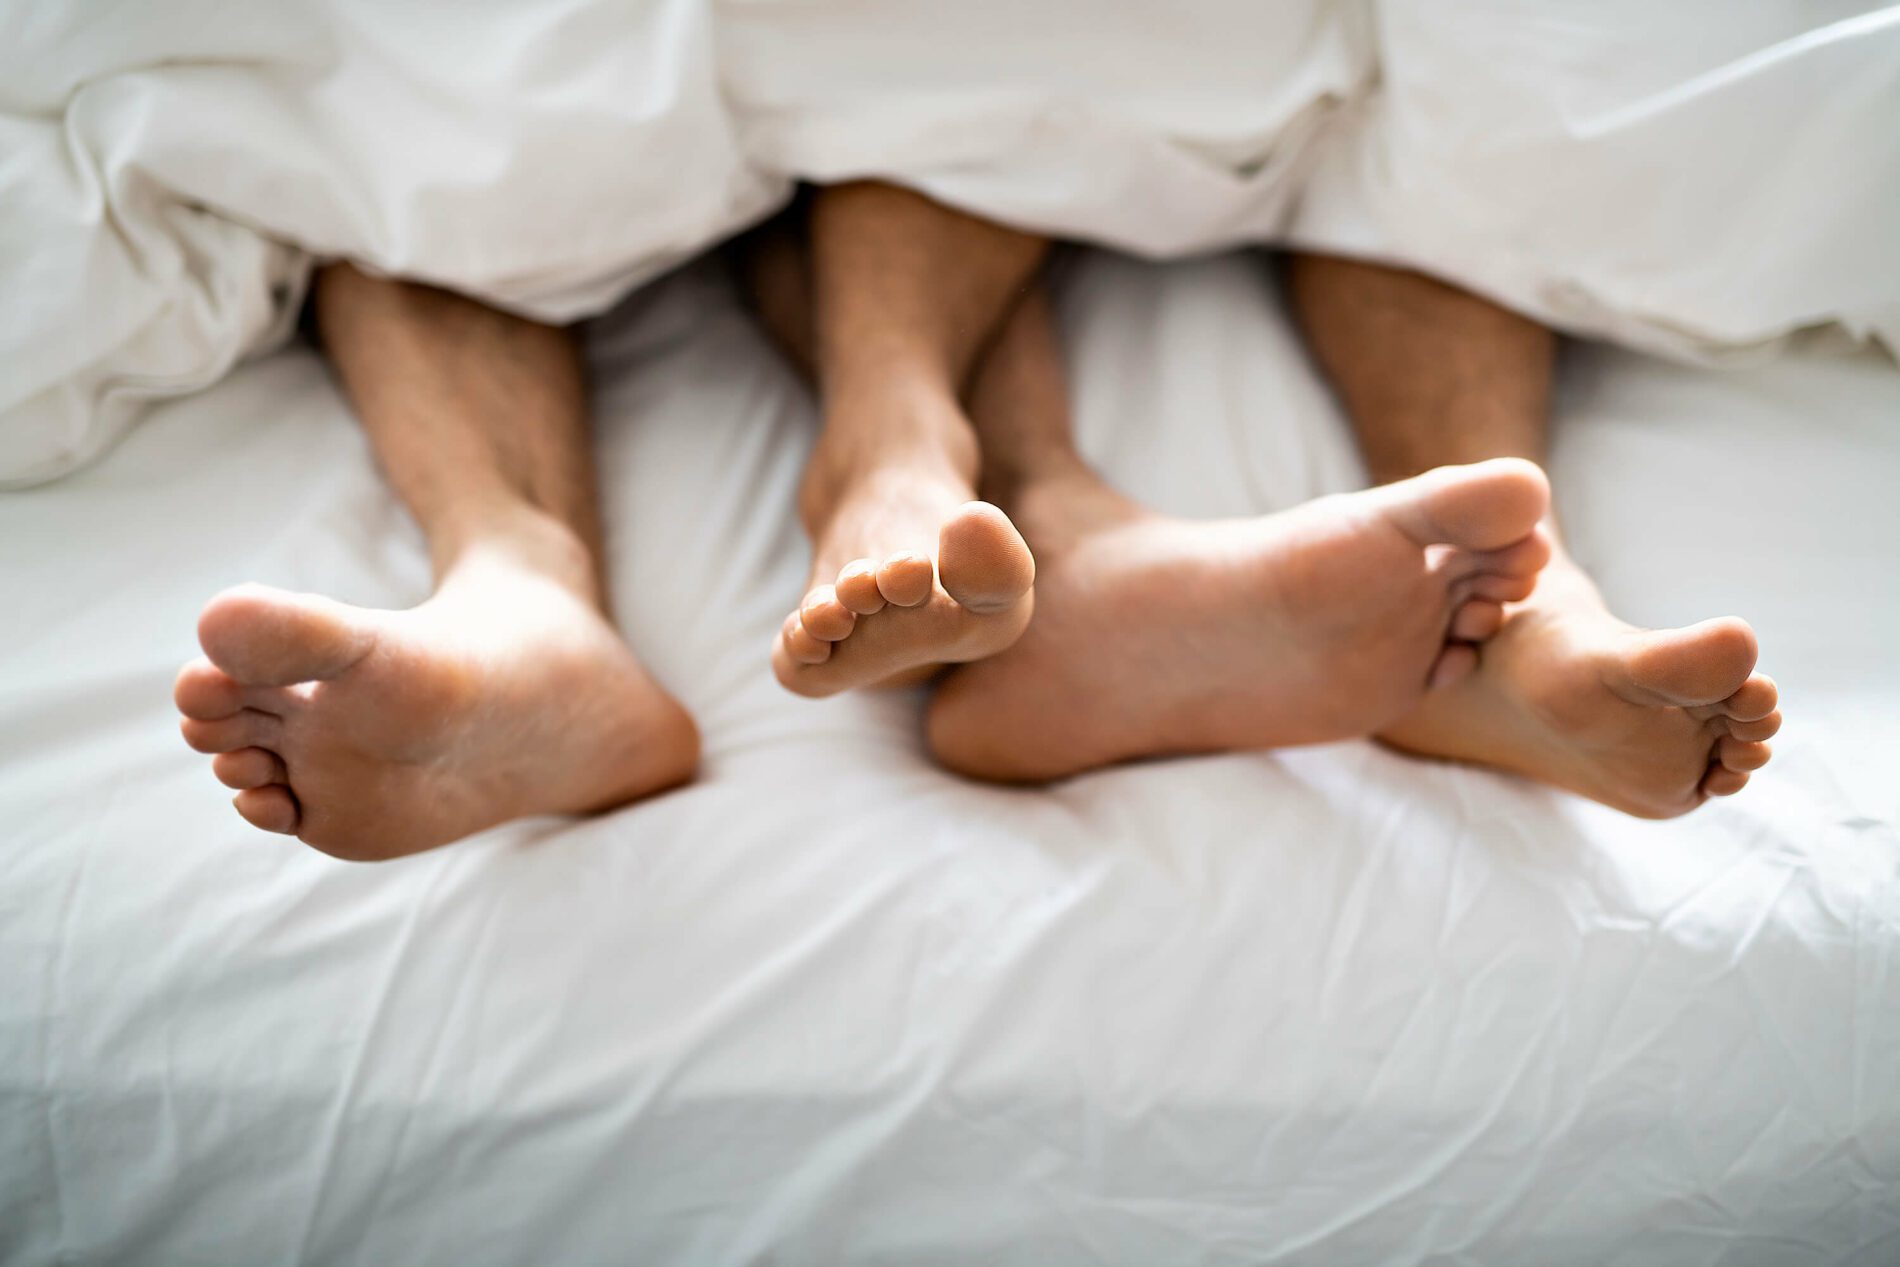 pieds couple libido sexualite